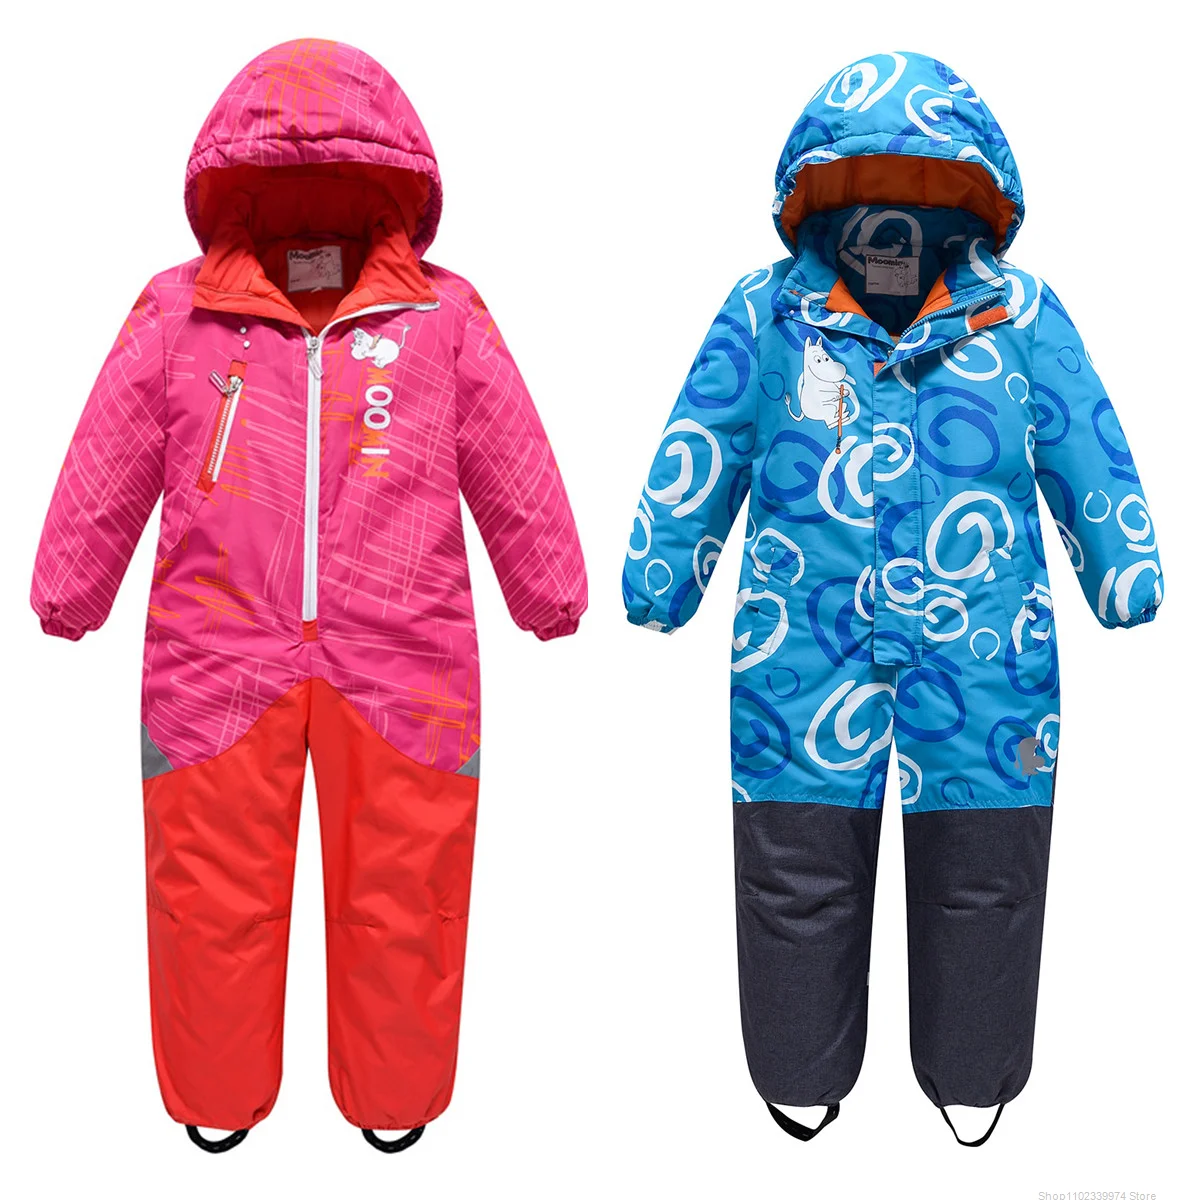 New Boys Girls Ski Suits Warm Breathable One-piece Snow Suits Ski Snowboards Waterproof Children's Sports Clohtes Pants Set